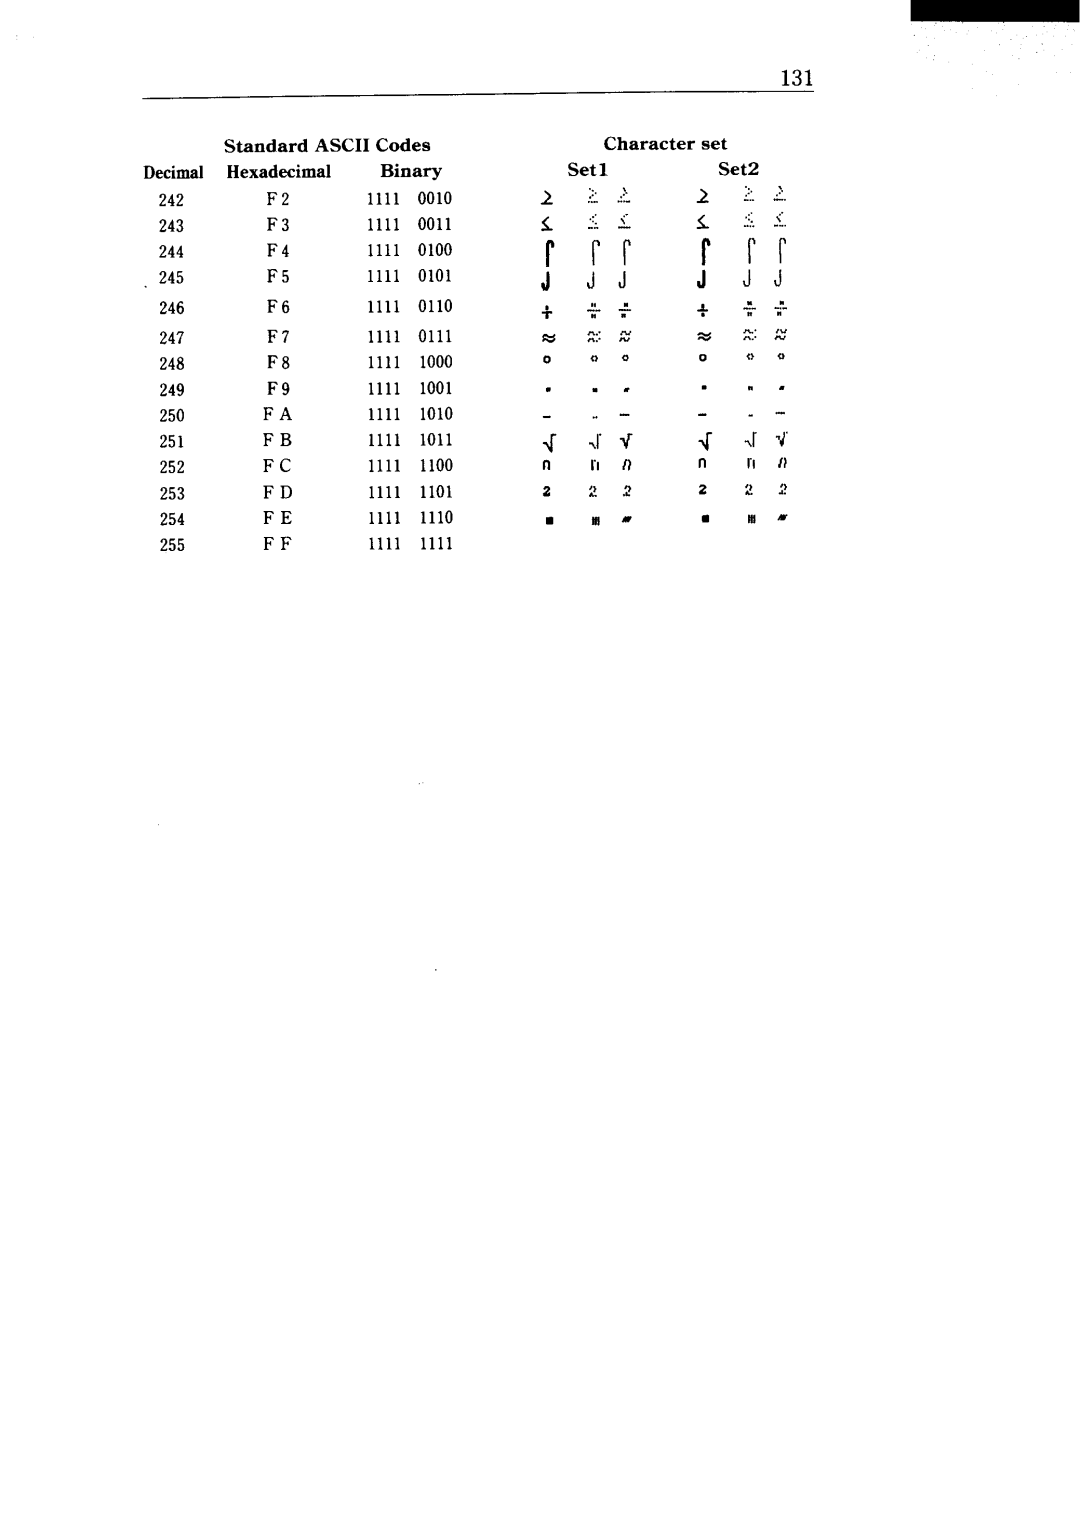 Star Micronics NX-15 StandardASCIICodes Decimal Hexadecimal Binary, 252 FC 1111 253 FD 1111 254 FE 1111 255 FF 1111 